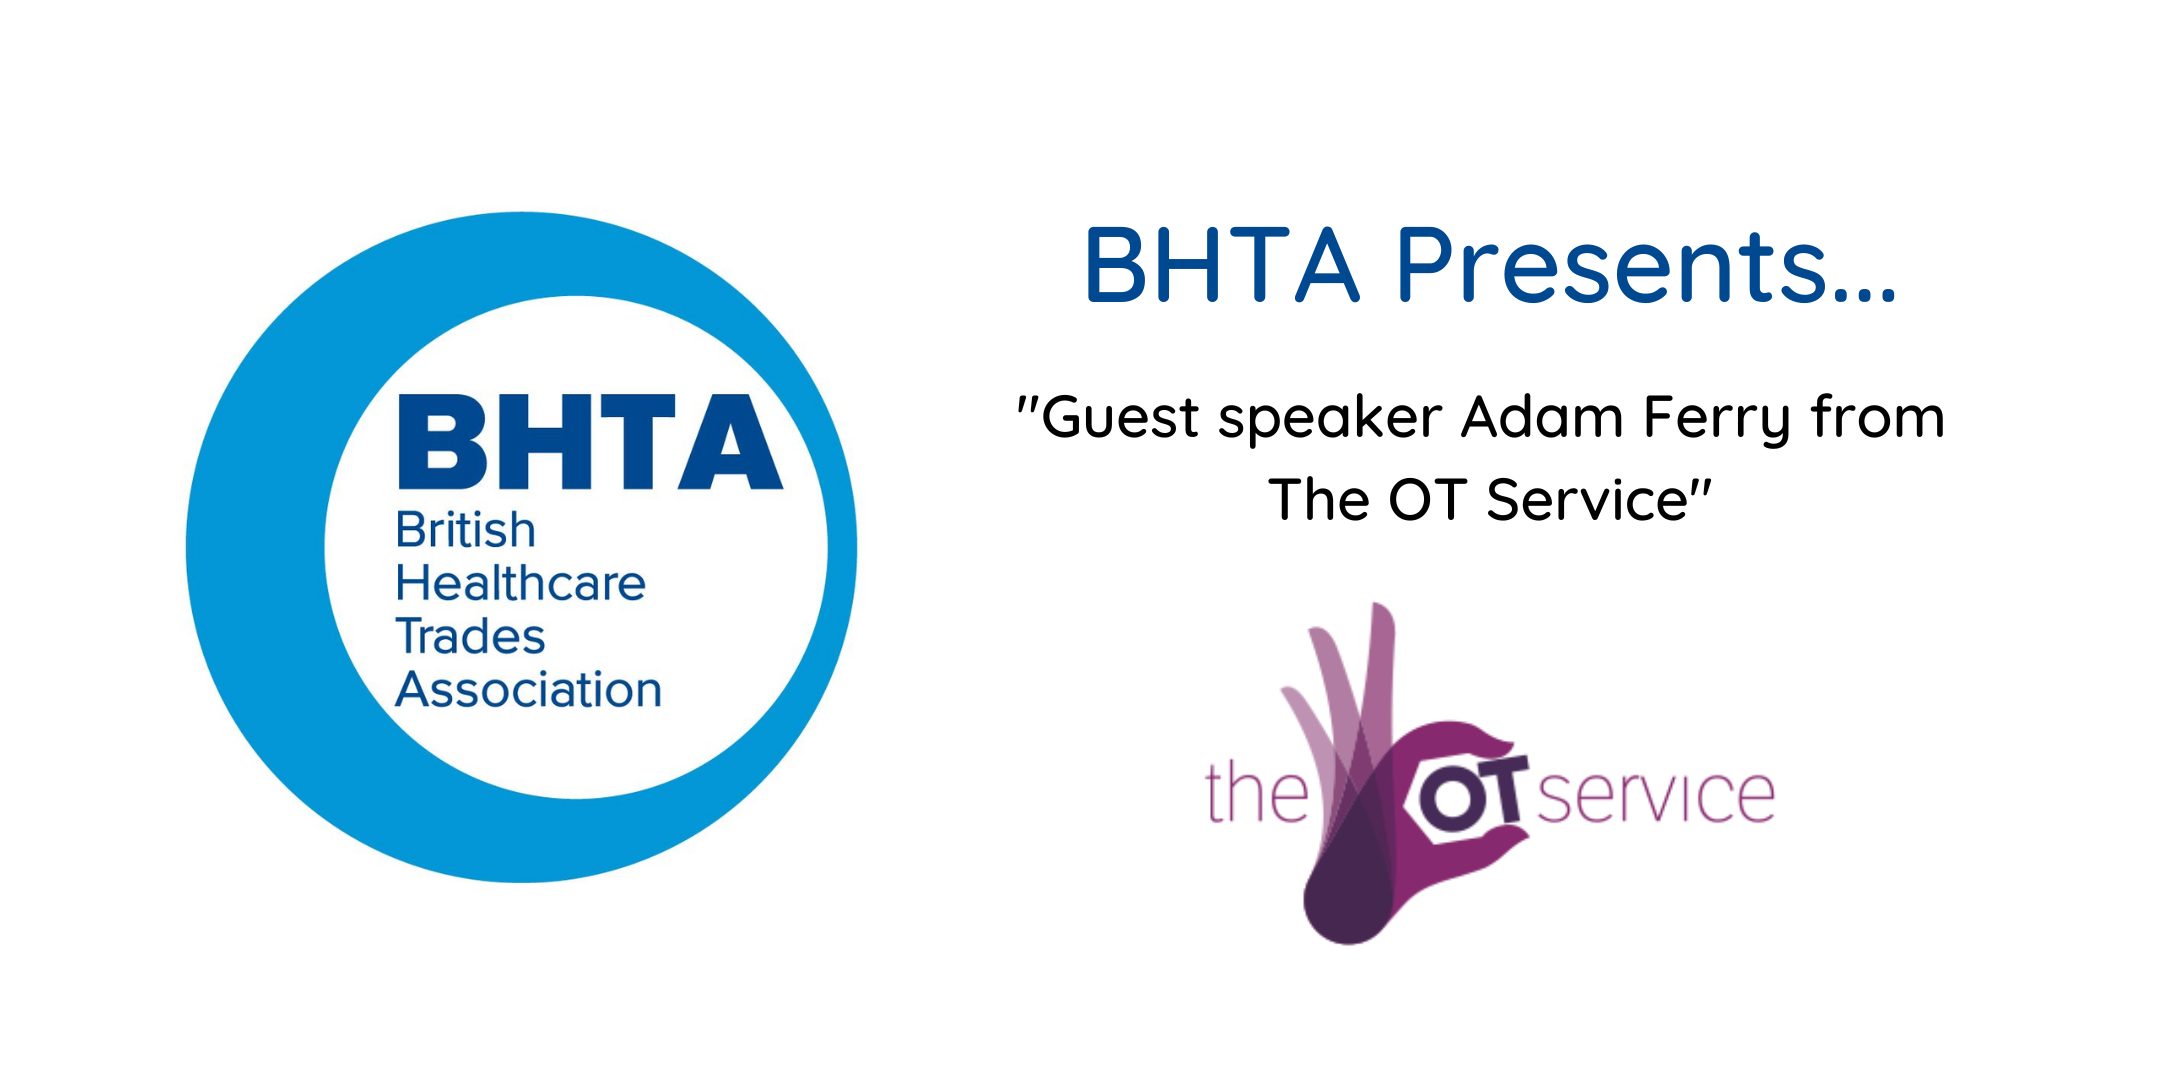 BHTA presents... "The OT Service"